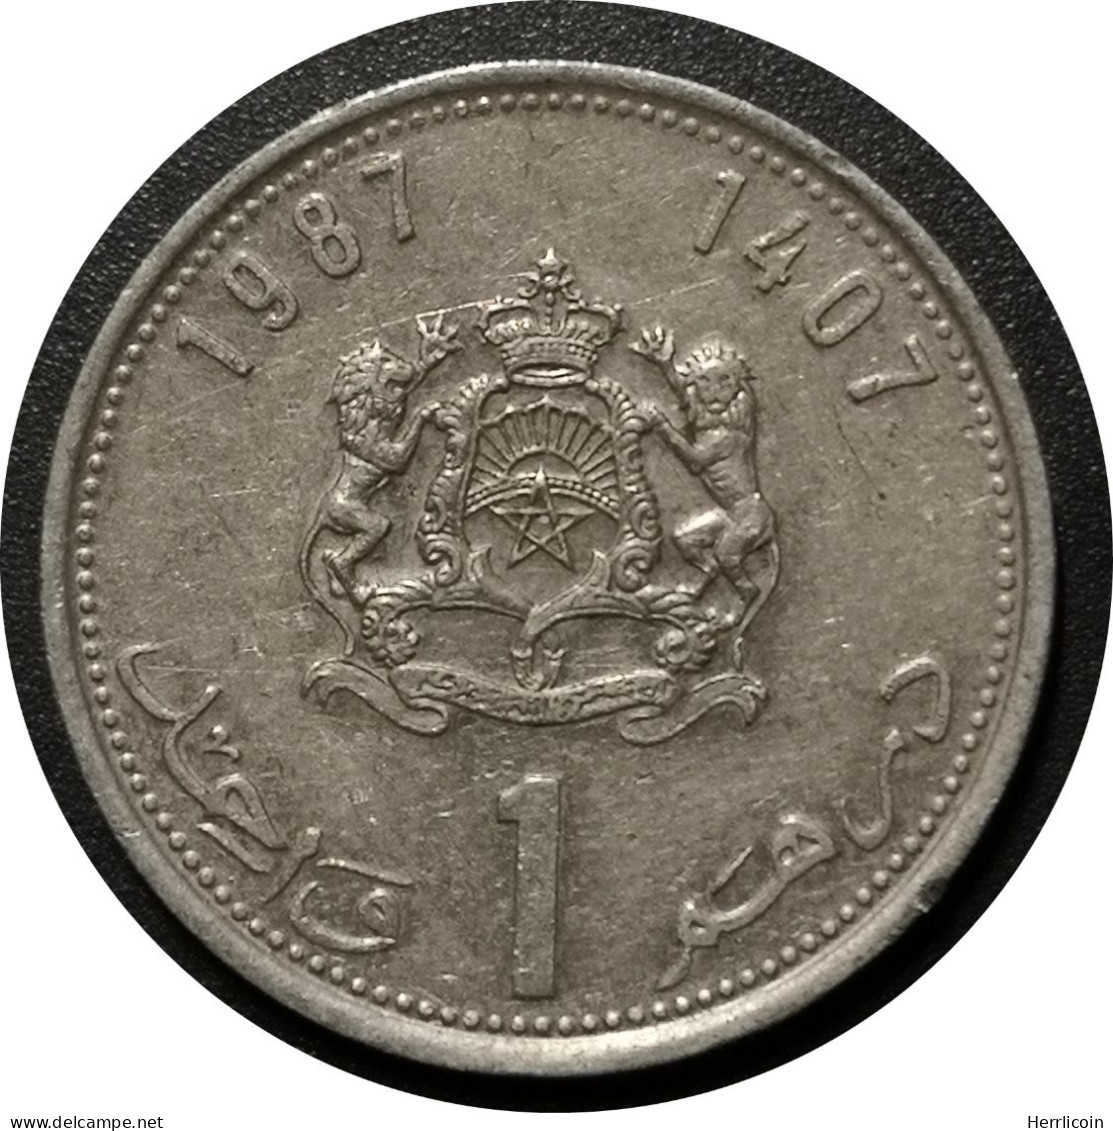 Monnaie Maroc - 1987 (1407 ) - 1 Dirham Hassan II 3e Effigie - Maroc